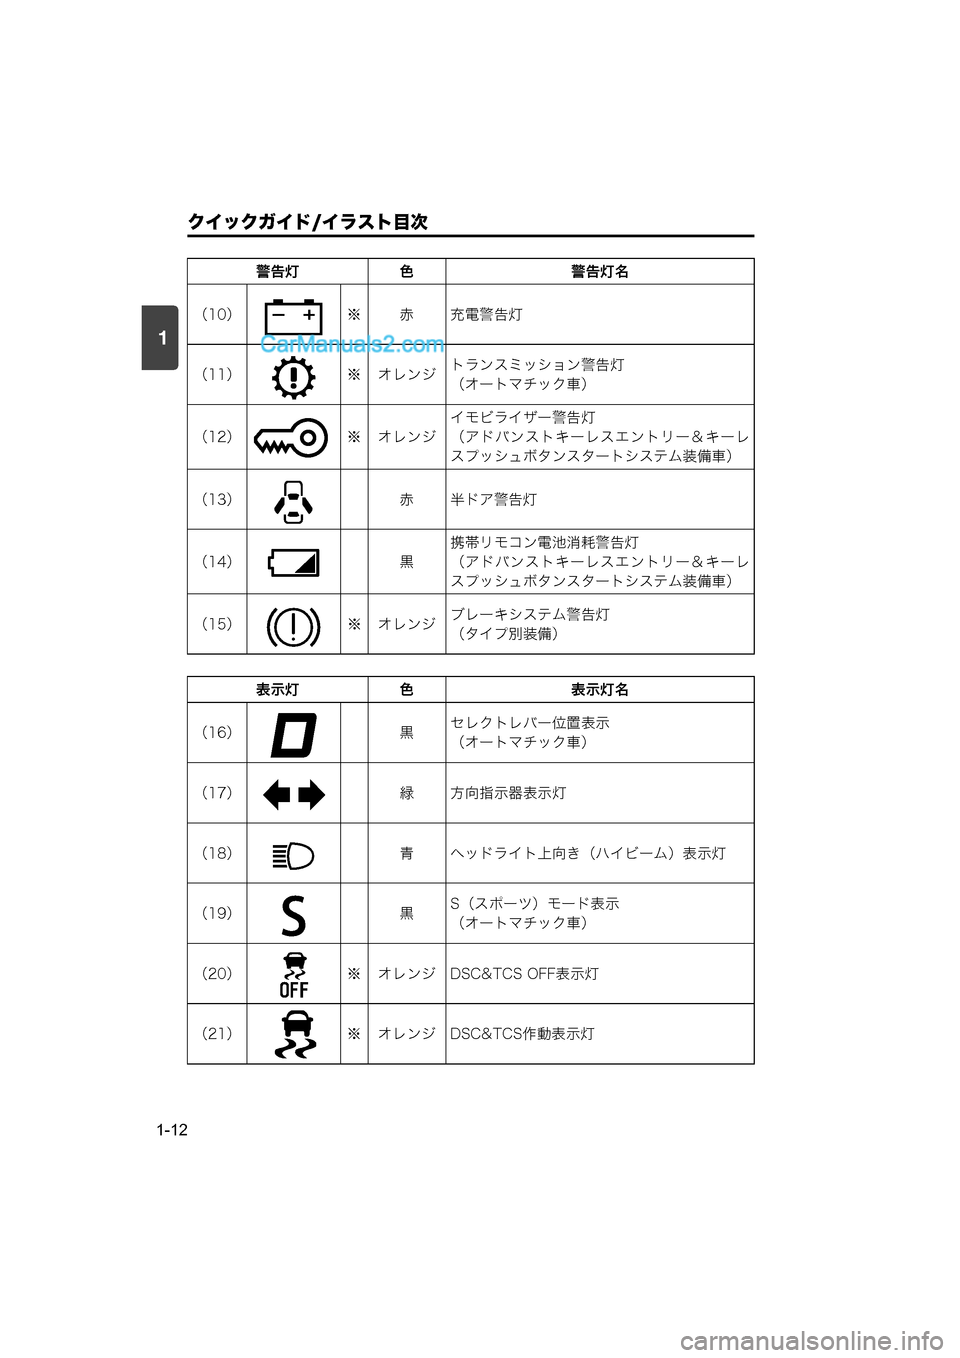 MAZDA MODEL CARROL 2015  取扱説明書 (キャロル) (in Japanese) 1
クイックガイド/イラスト目次
1-12
（10）※ 赤 充電警告灯
（11） ※ オレンジトランスミッション警告灯
（オートマチック車）
（12） ※ オレンジ�